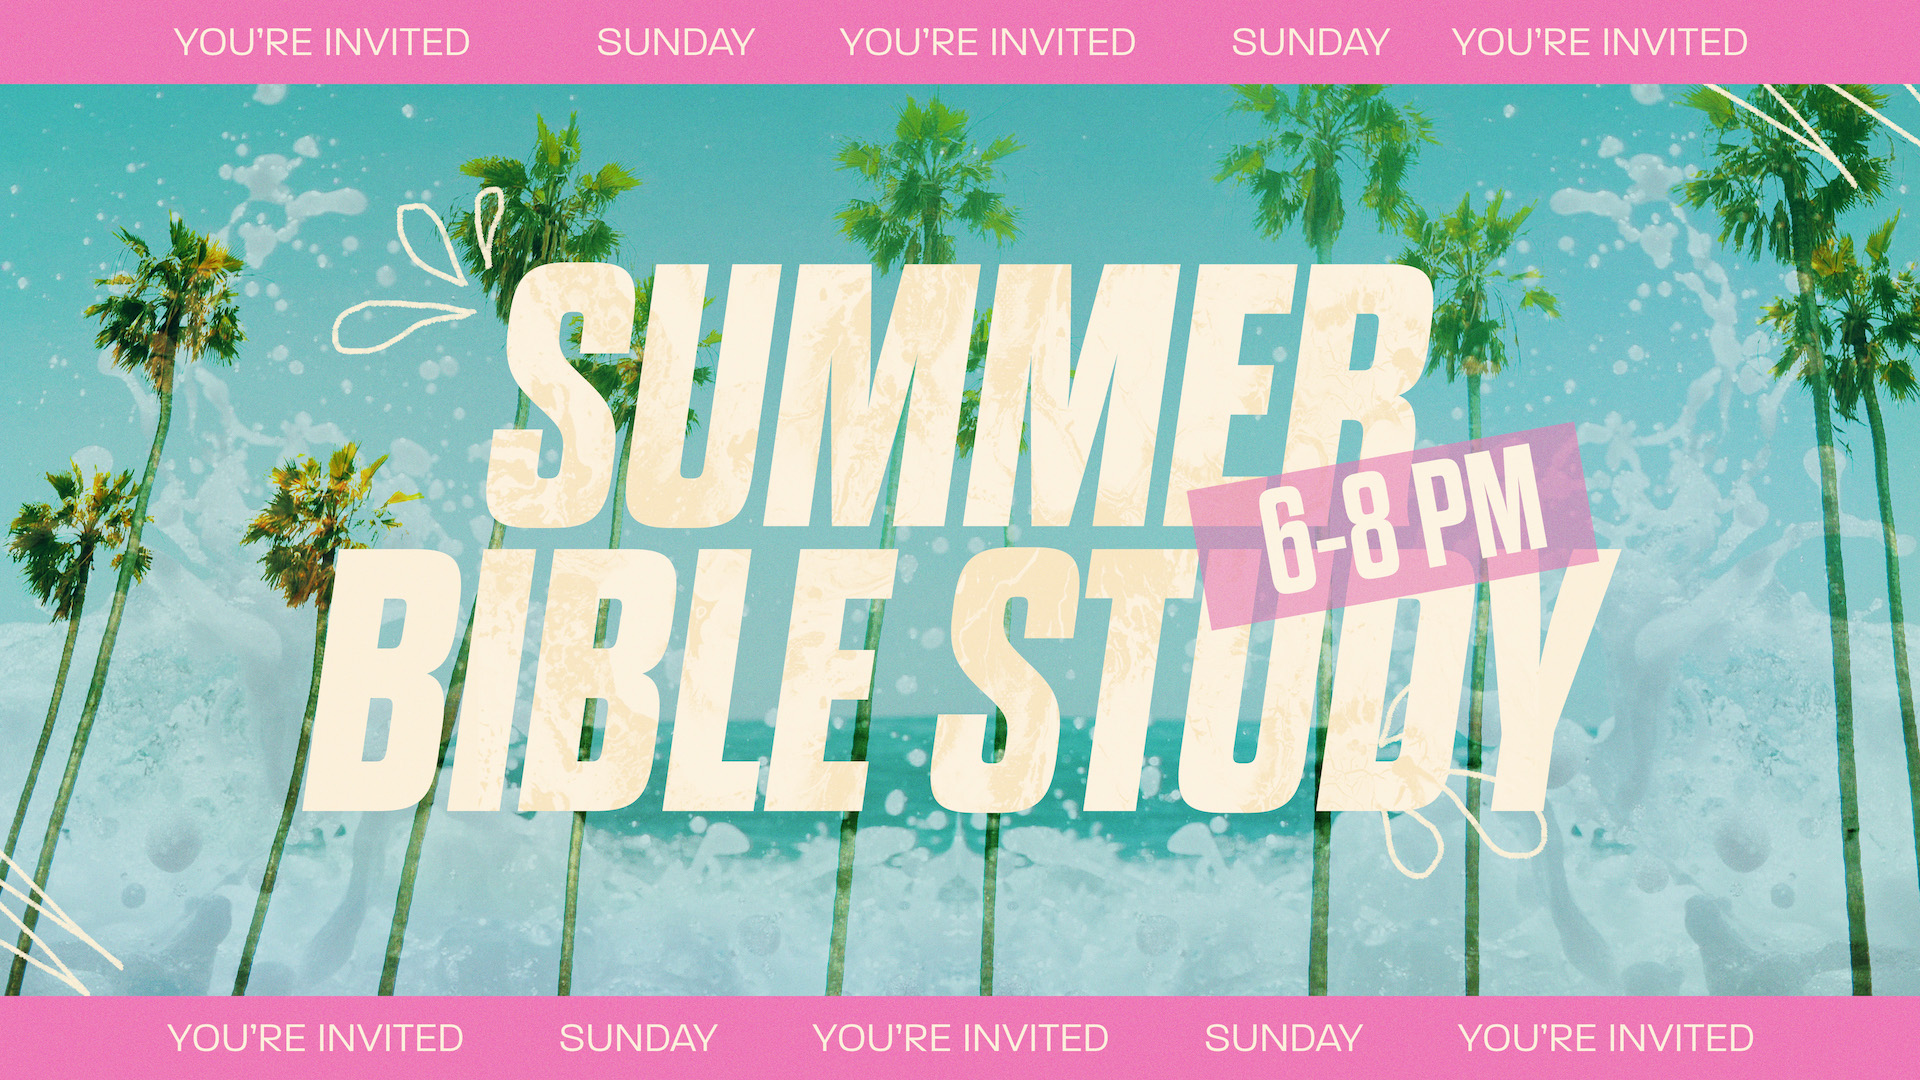 Summer Bible Study image